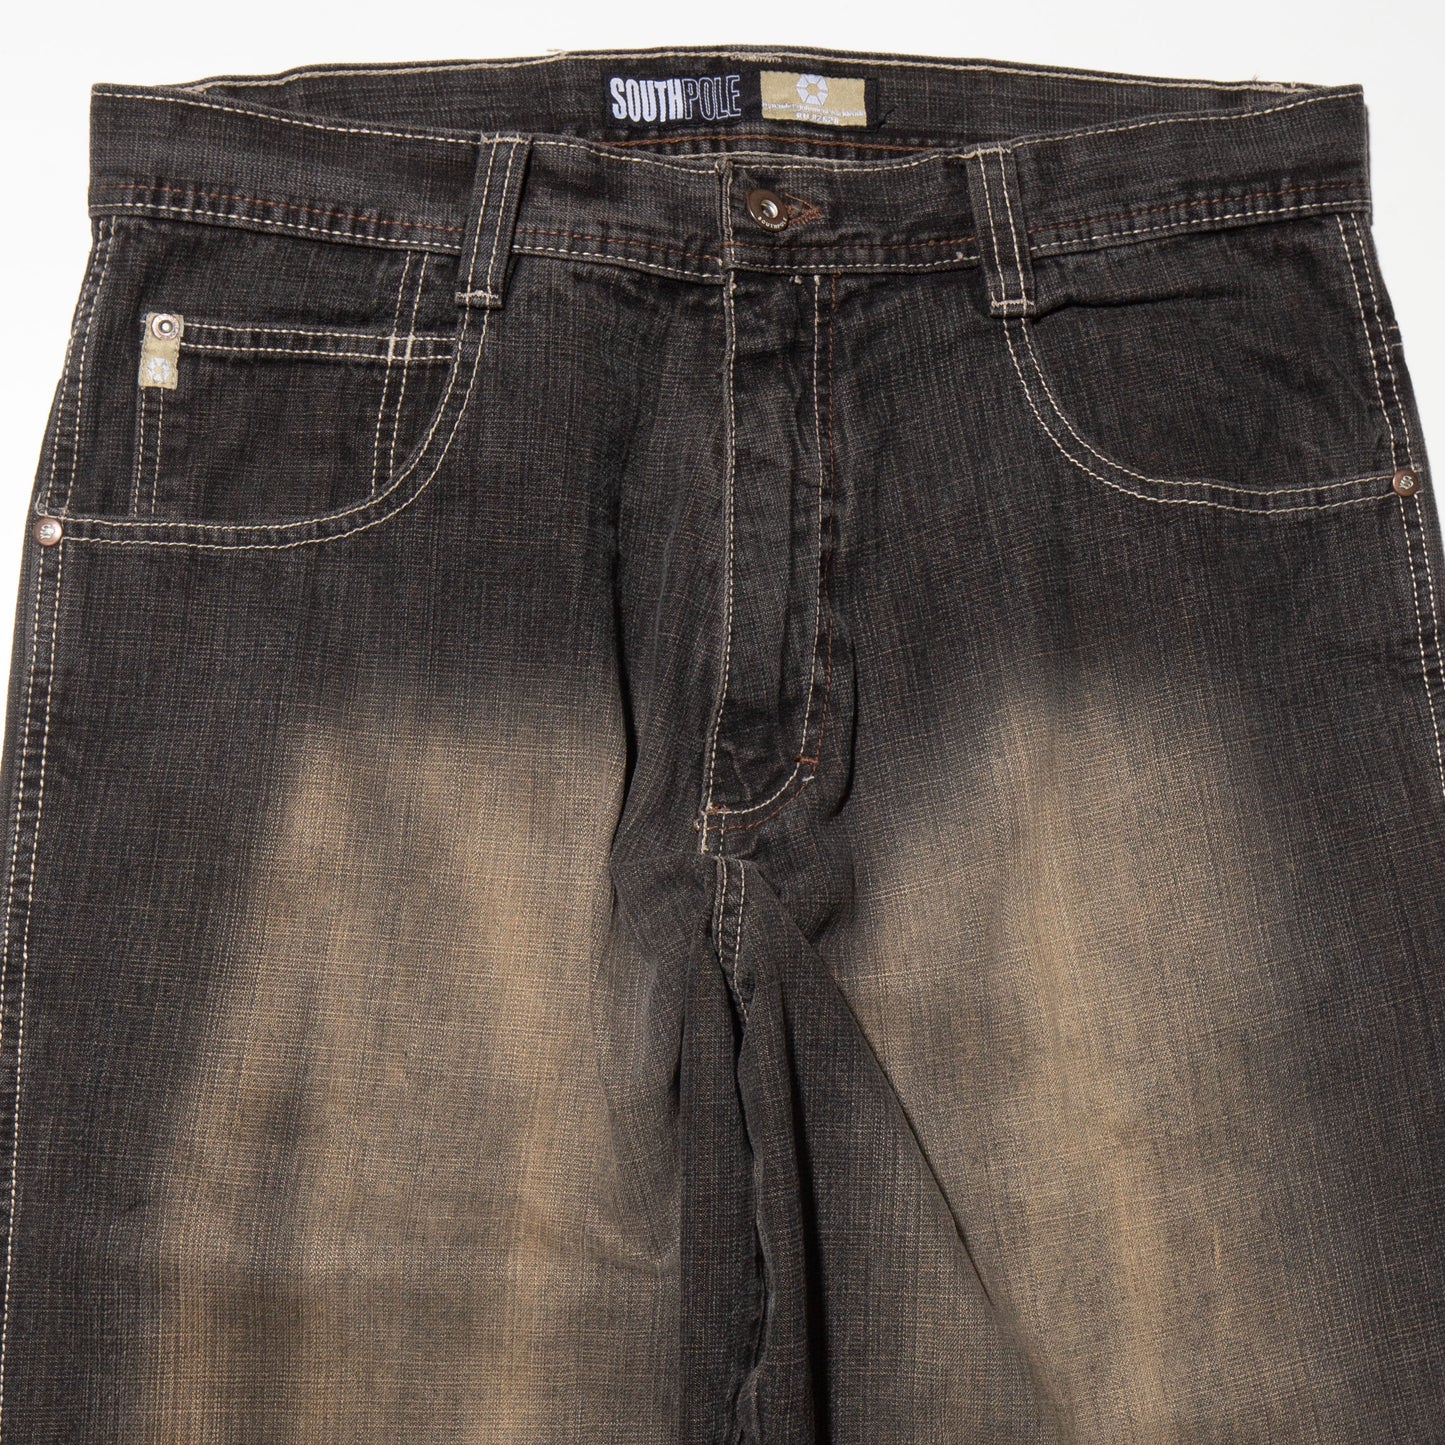 vintage south pole fade baggy jeans